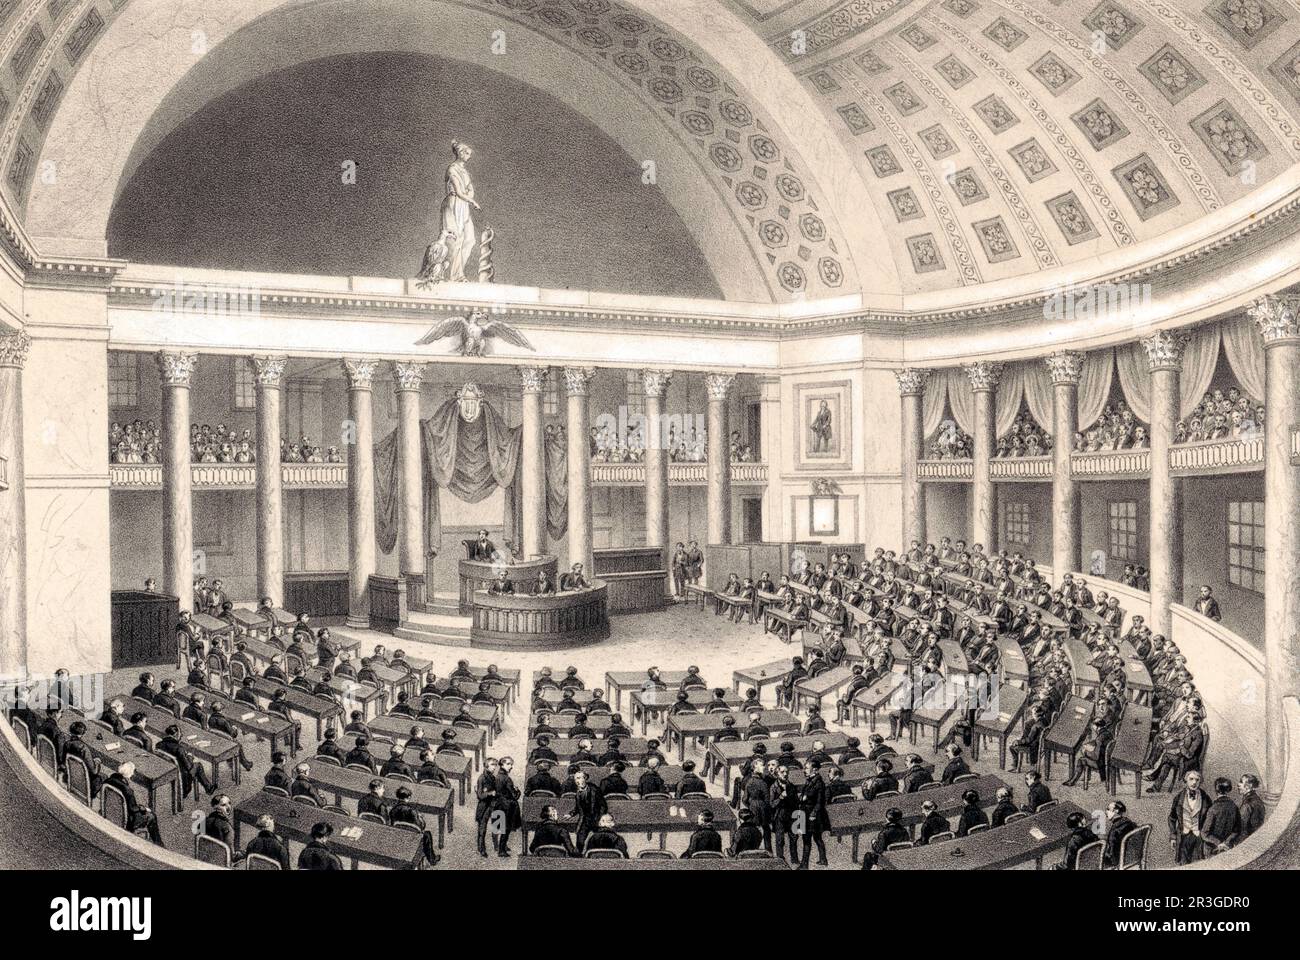 Vintage print of the House of Representatives chamber, Washington D.C. Stock Photo